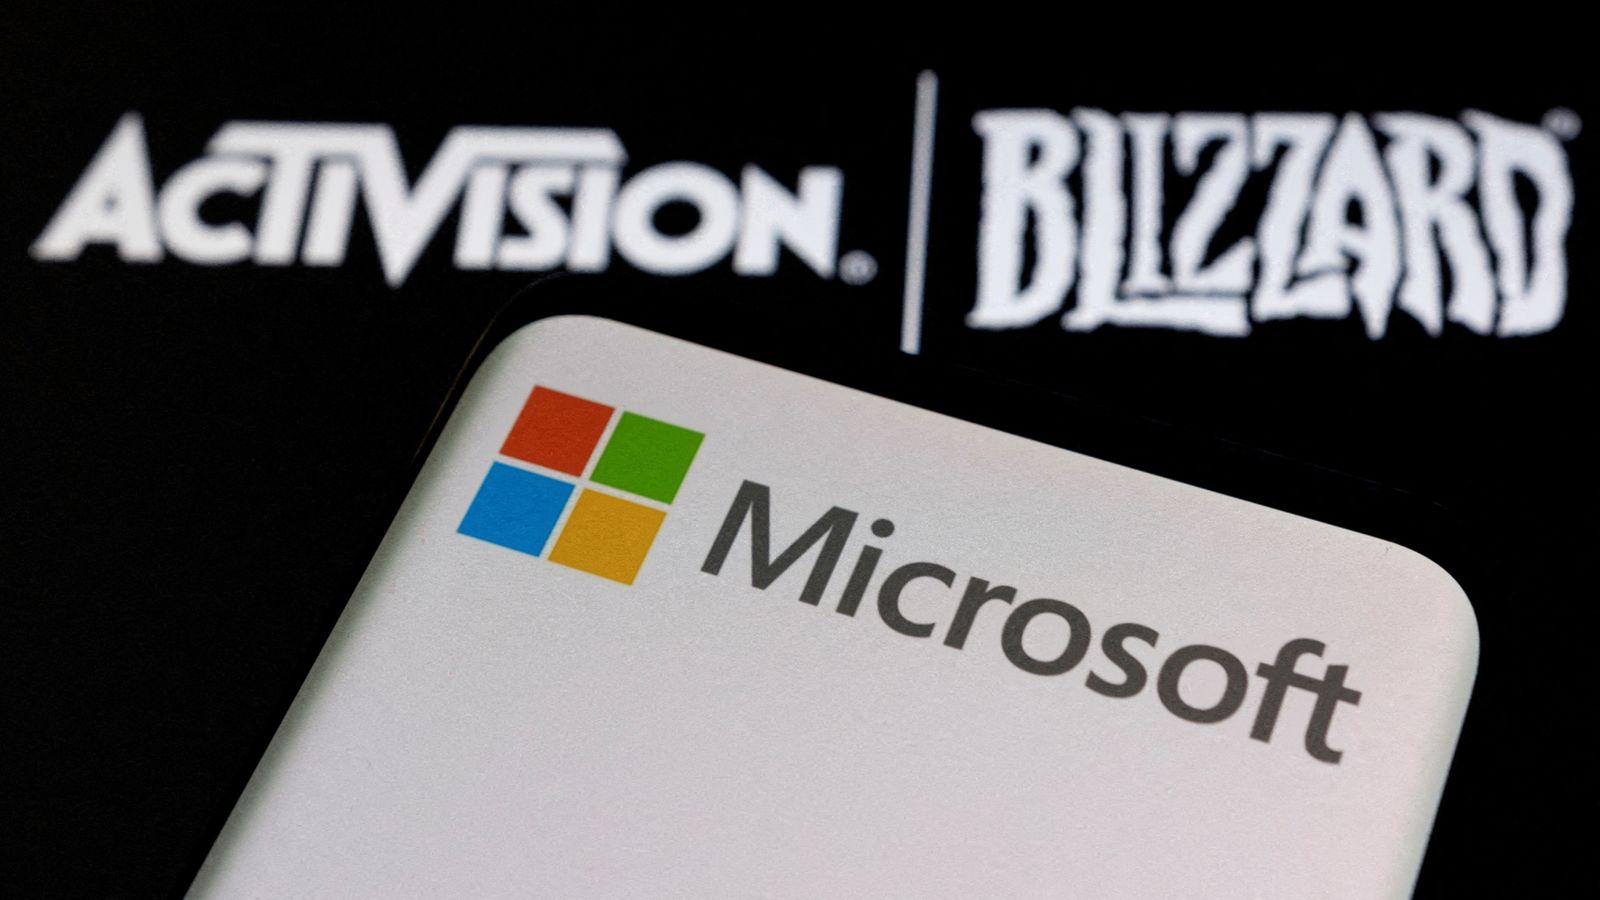 Microsoft's $69 Billion Acquisition of Activision Blizzard Faces Regulatory Scrutiny and Consumer Backlash